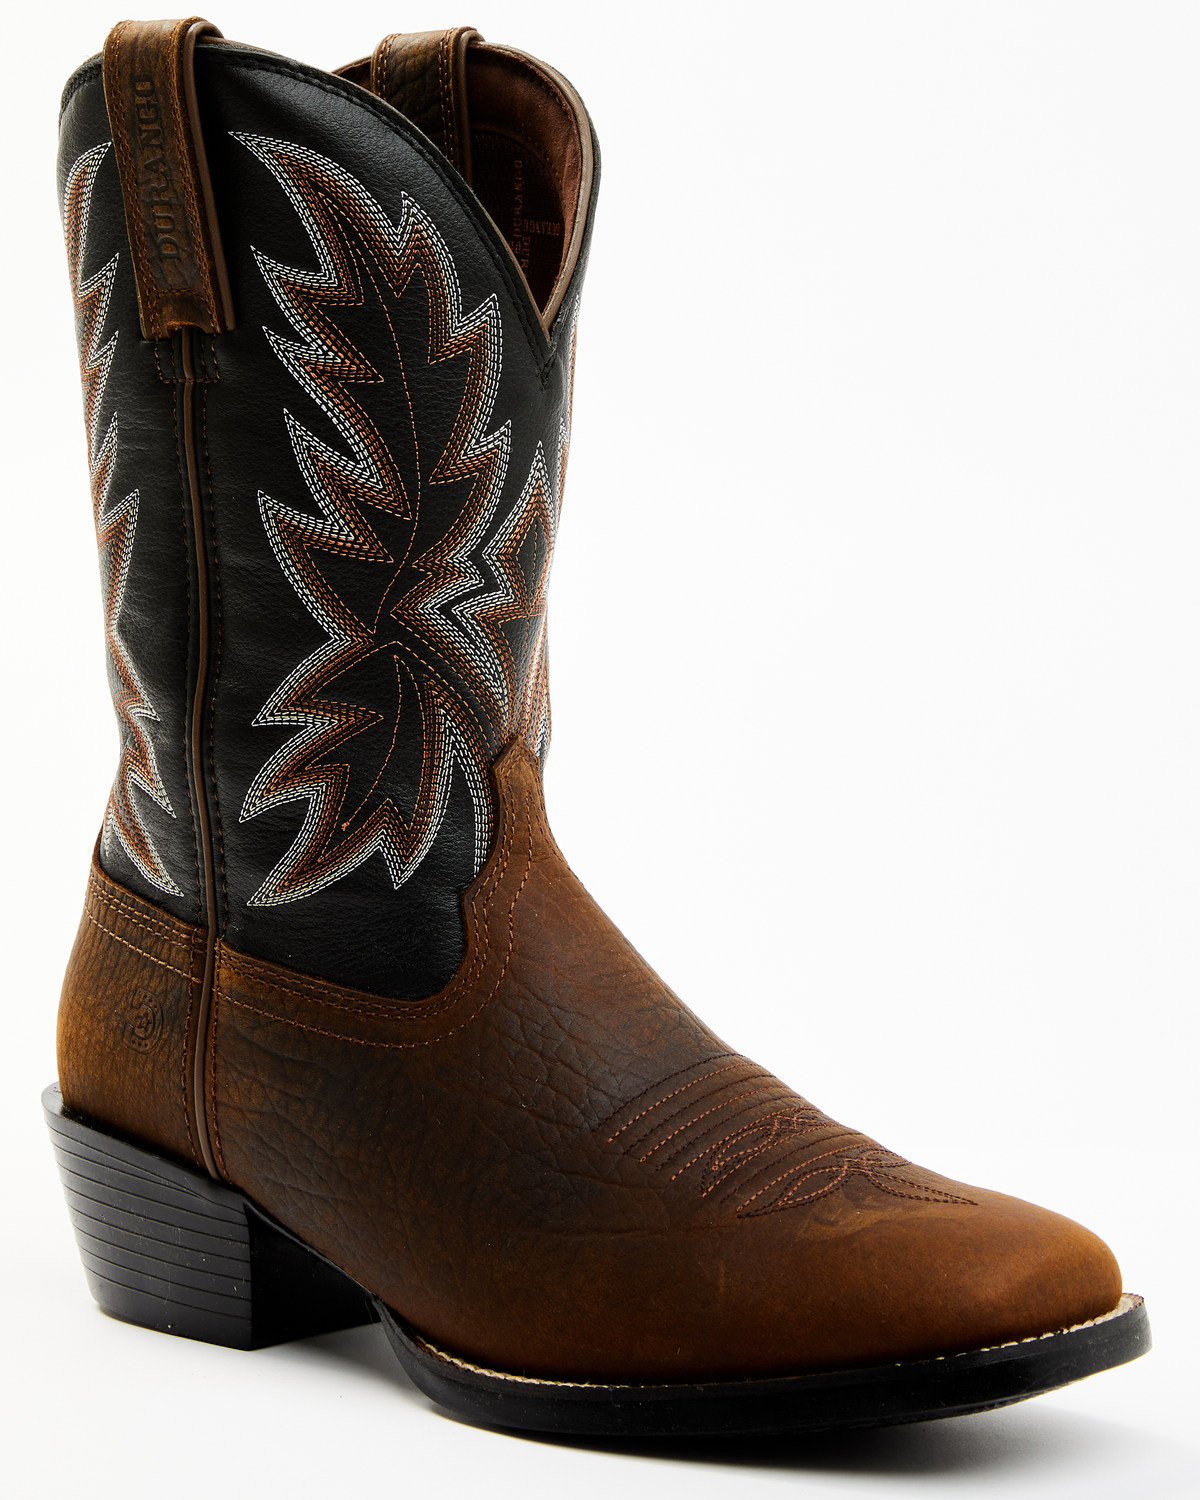 Durango Men's Westward Roughstock Western Performance Boots - Broad Square Toe